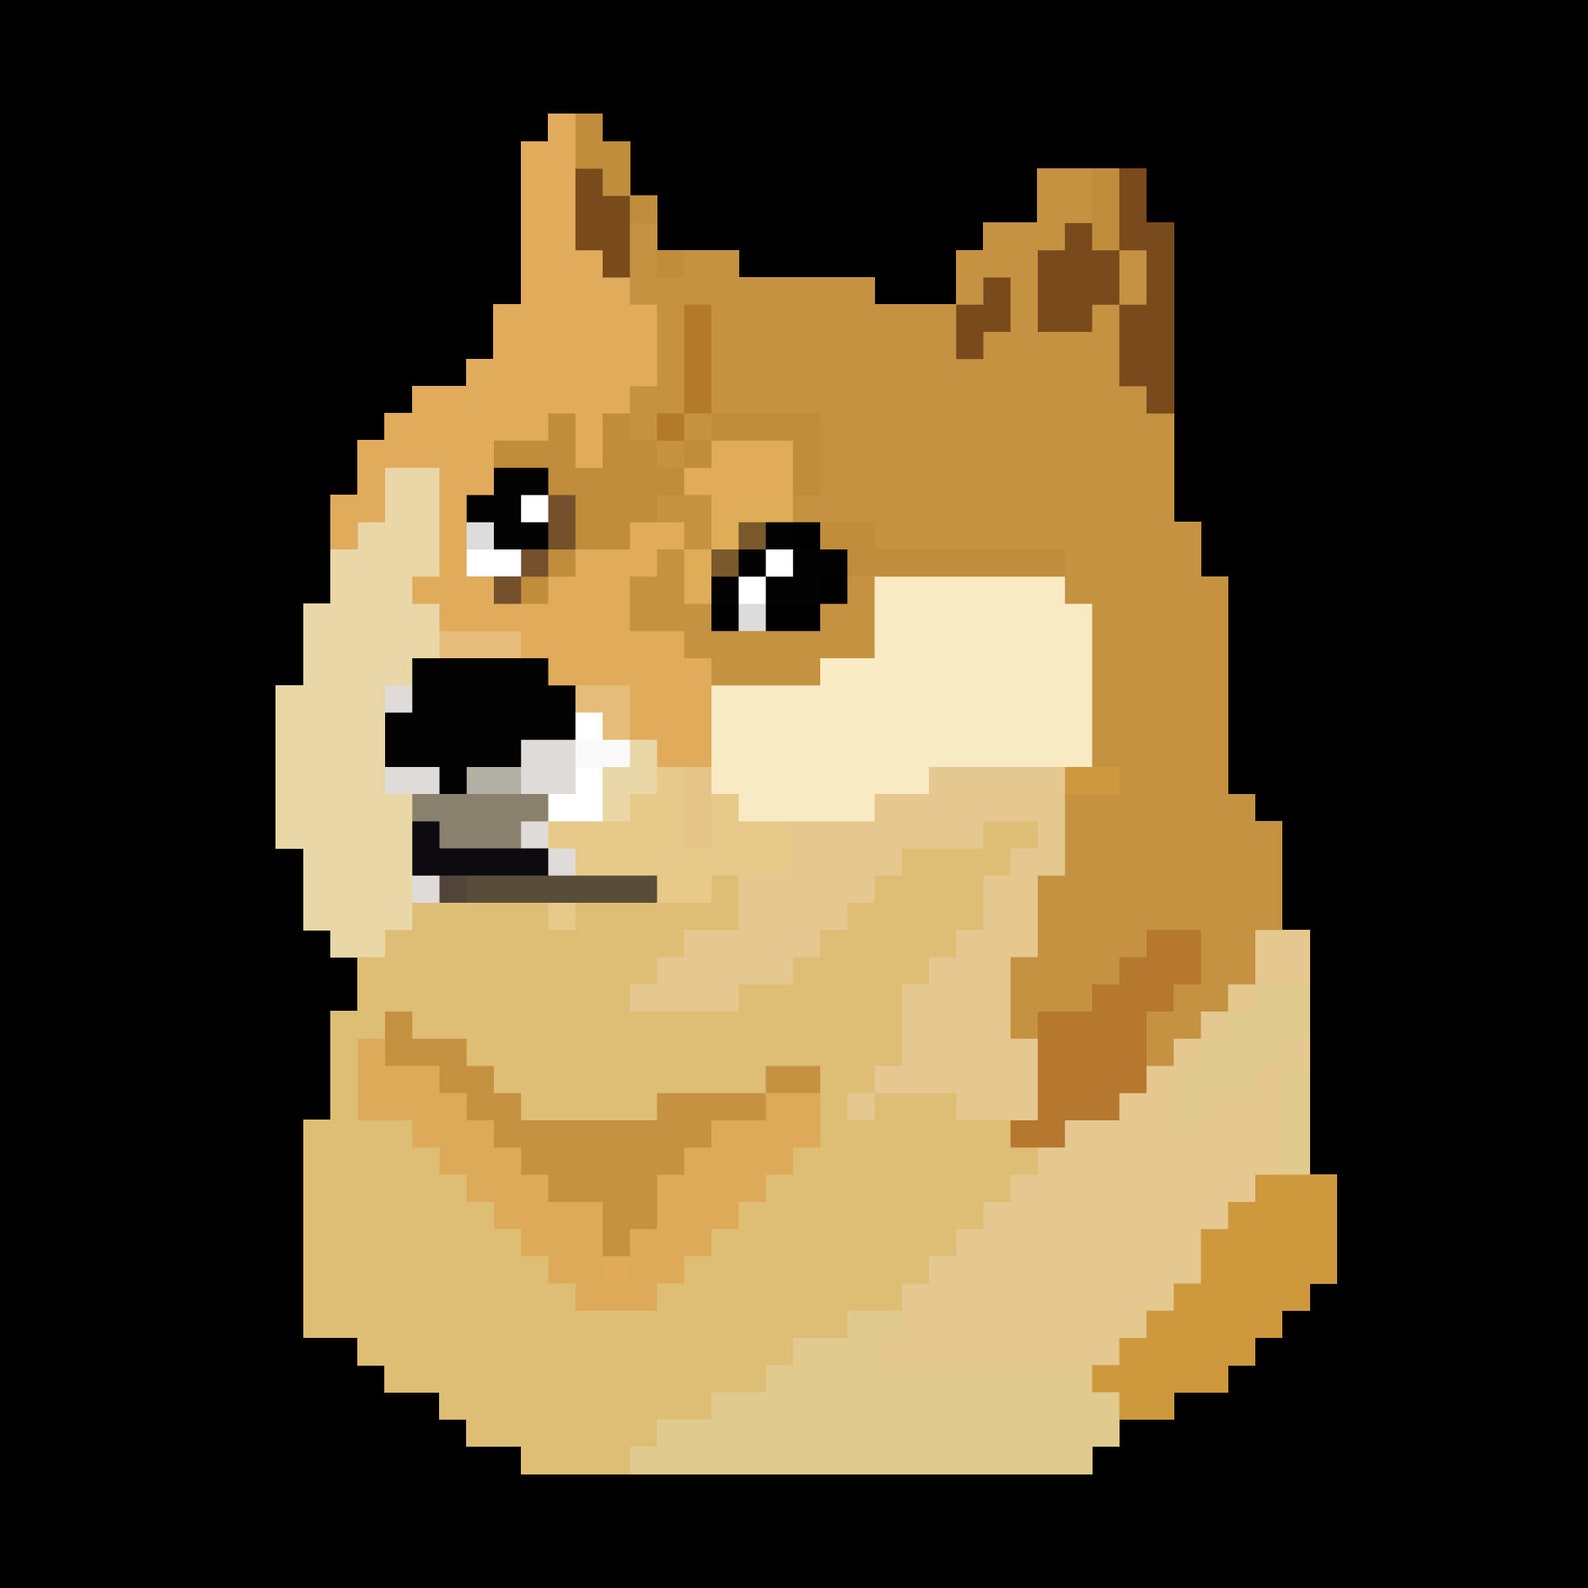 Doge Pixel Art 8 Bit Illustrator File .AI SVG PNG Files | Etsy